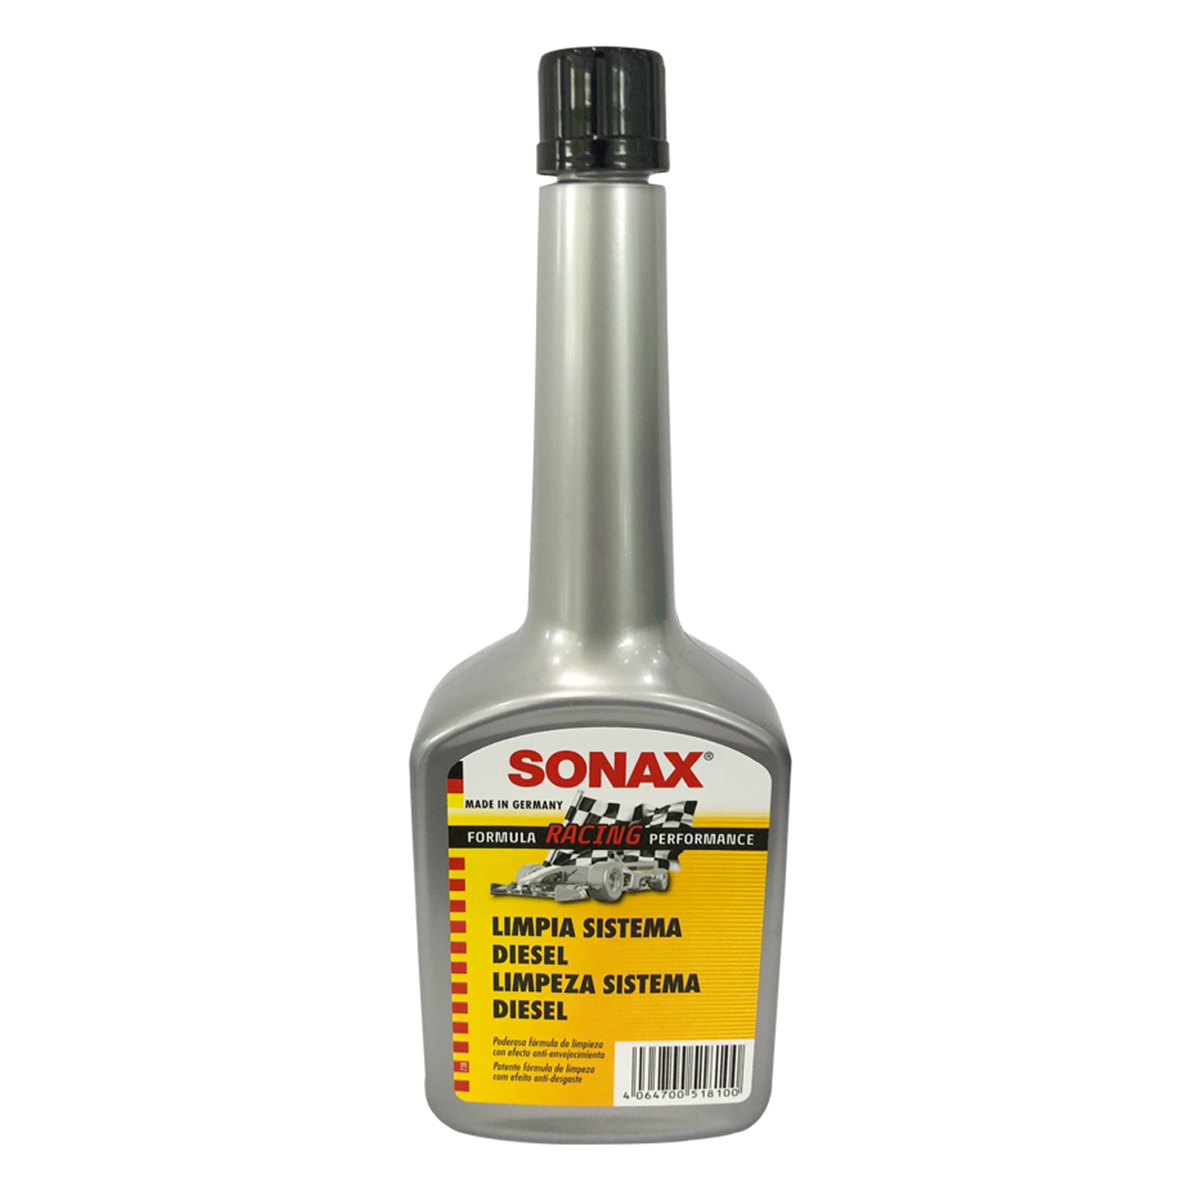 SONAX® LIMPIADOR SISTEMA DIESEL (250ML)